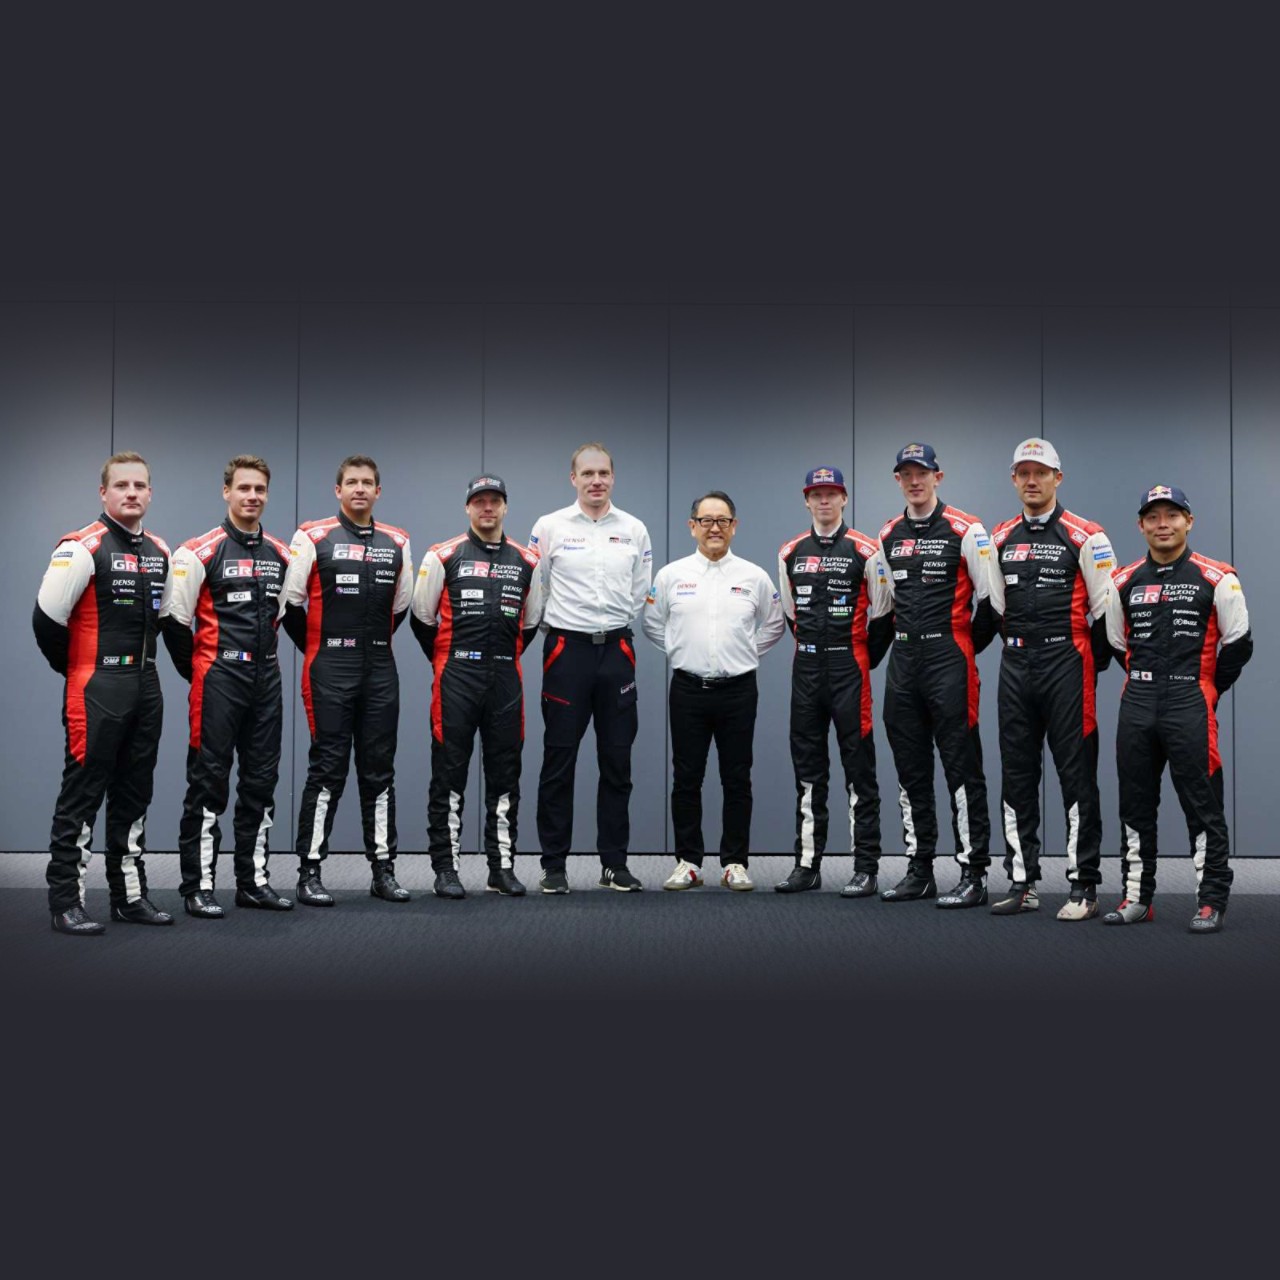 Toyota Gazoo Racing Team photo